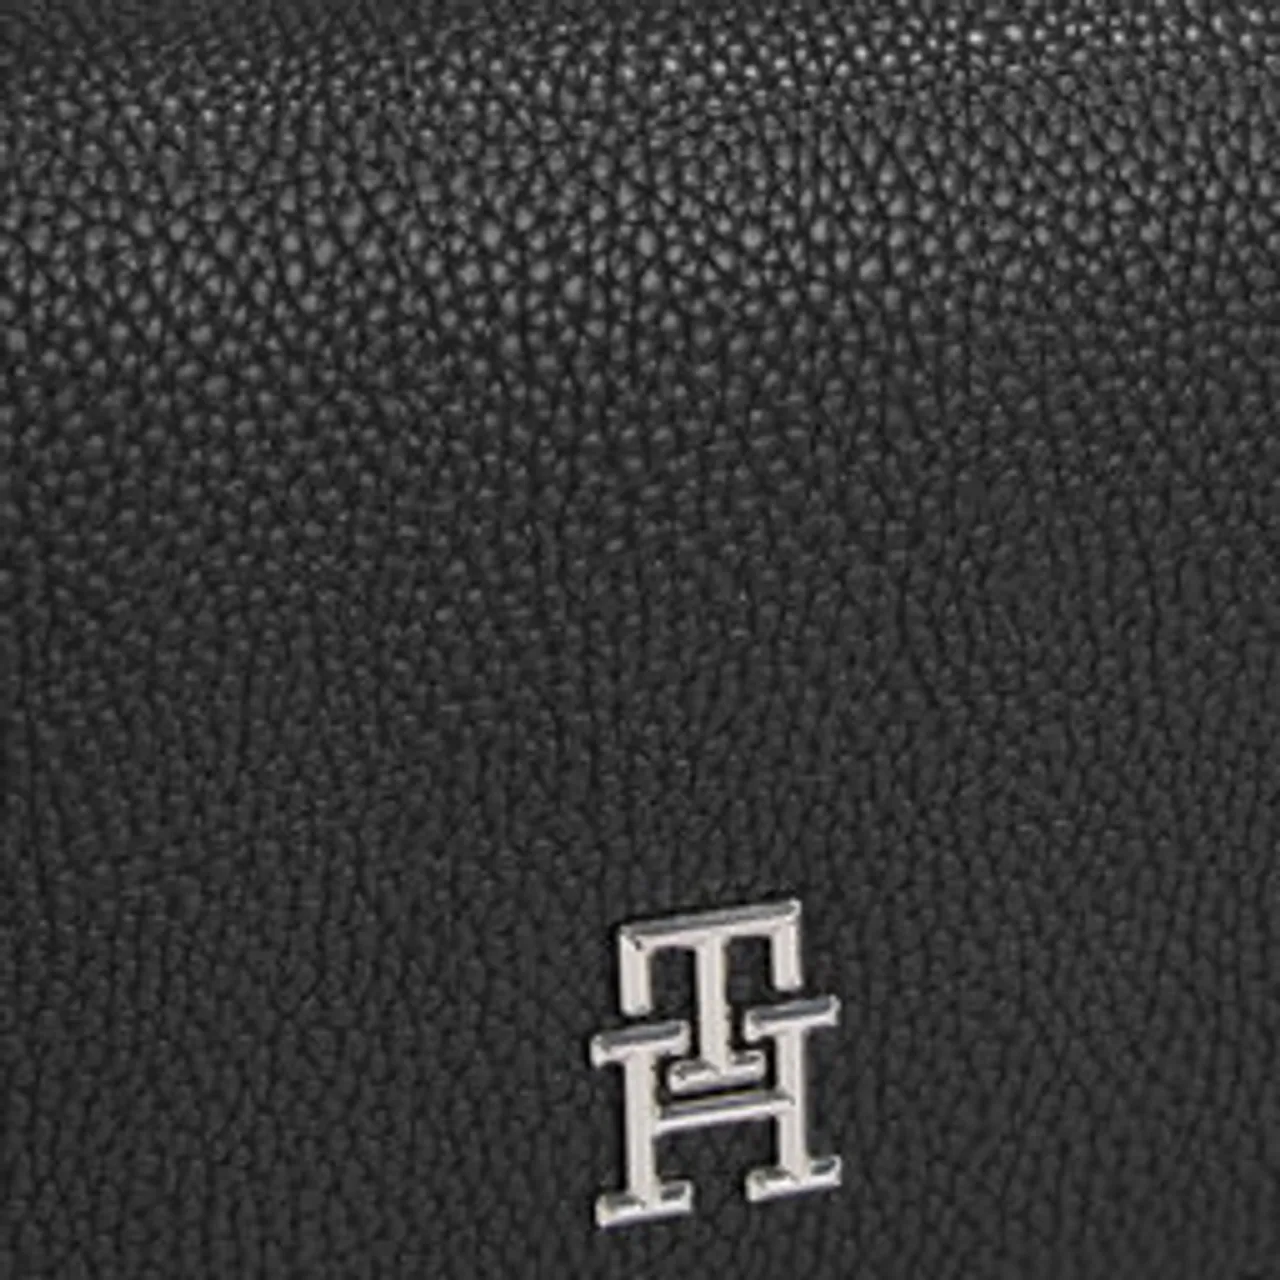 Handtasche Tommy Hilfiger Th Emblem Flap Crossover AW0AW15180 Black BDS